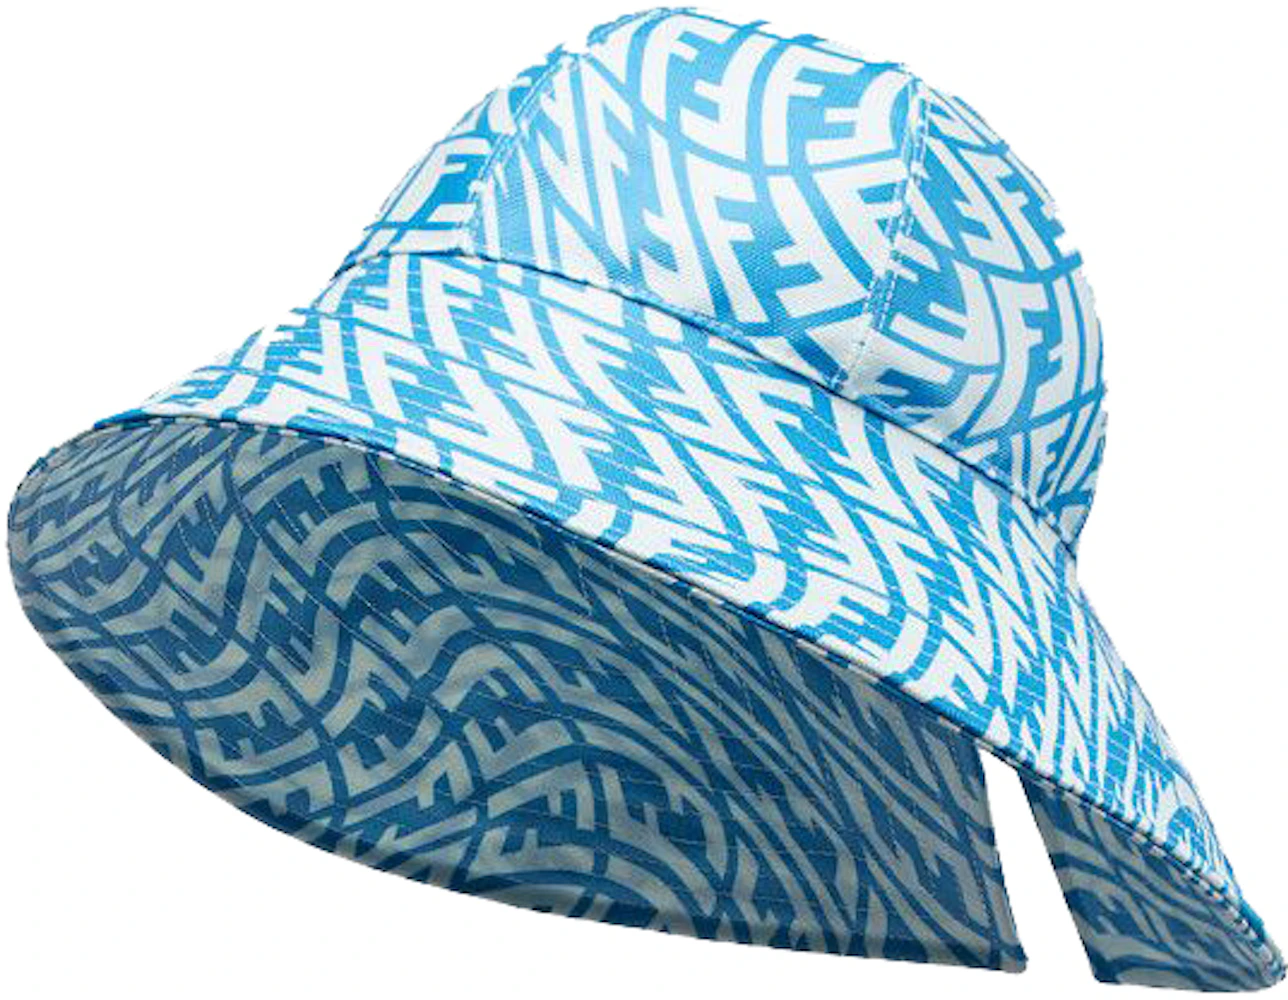 Fendi Jacquard FF Fabric Bucket Hat